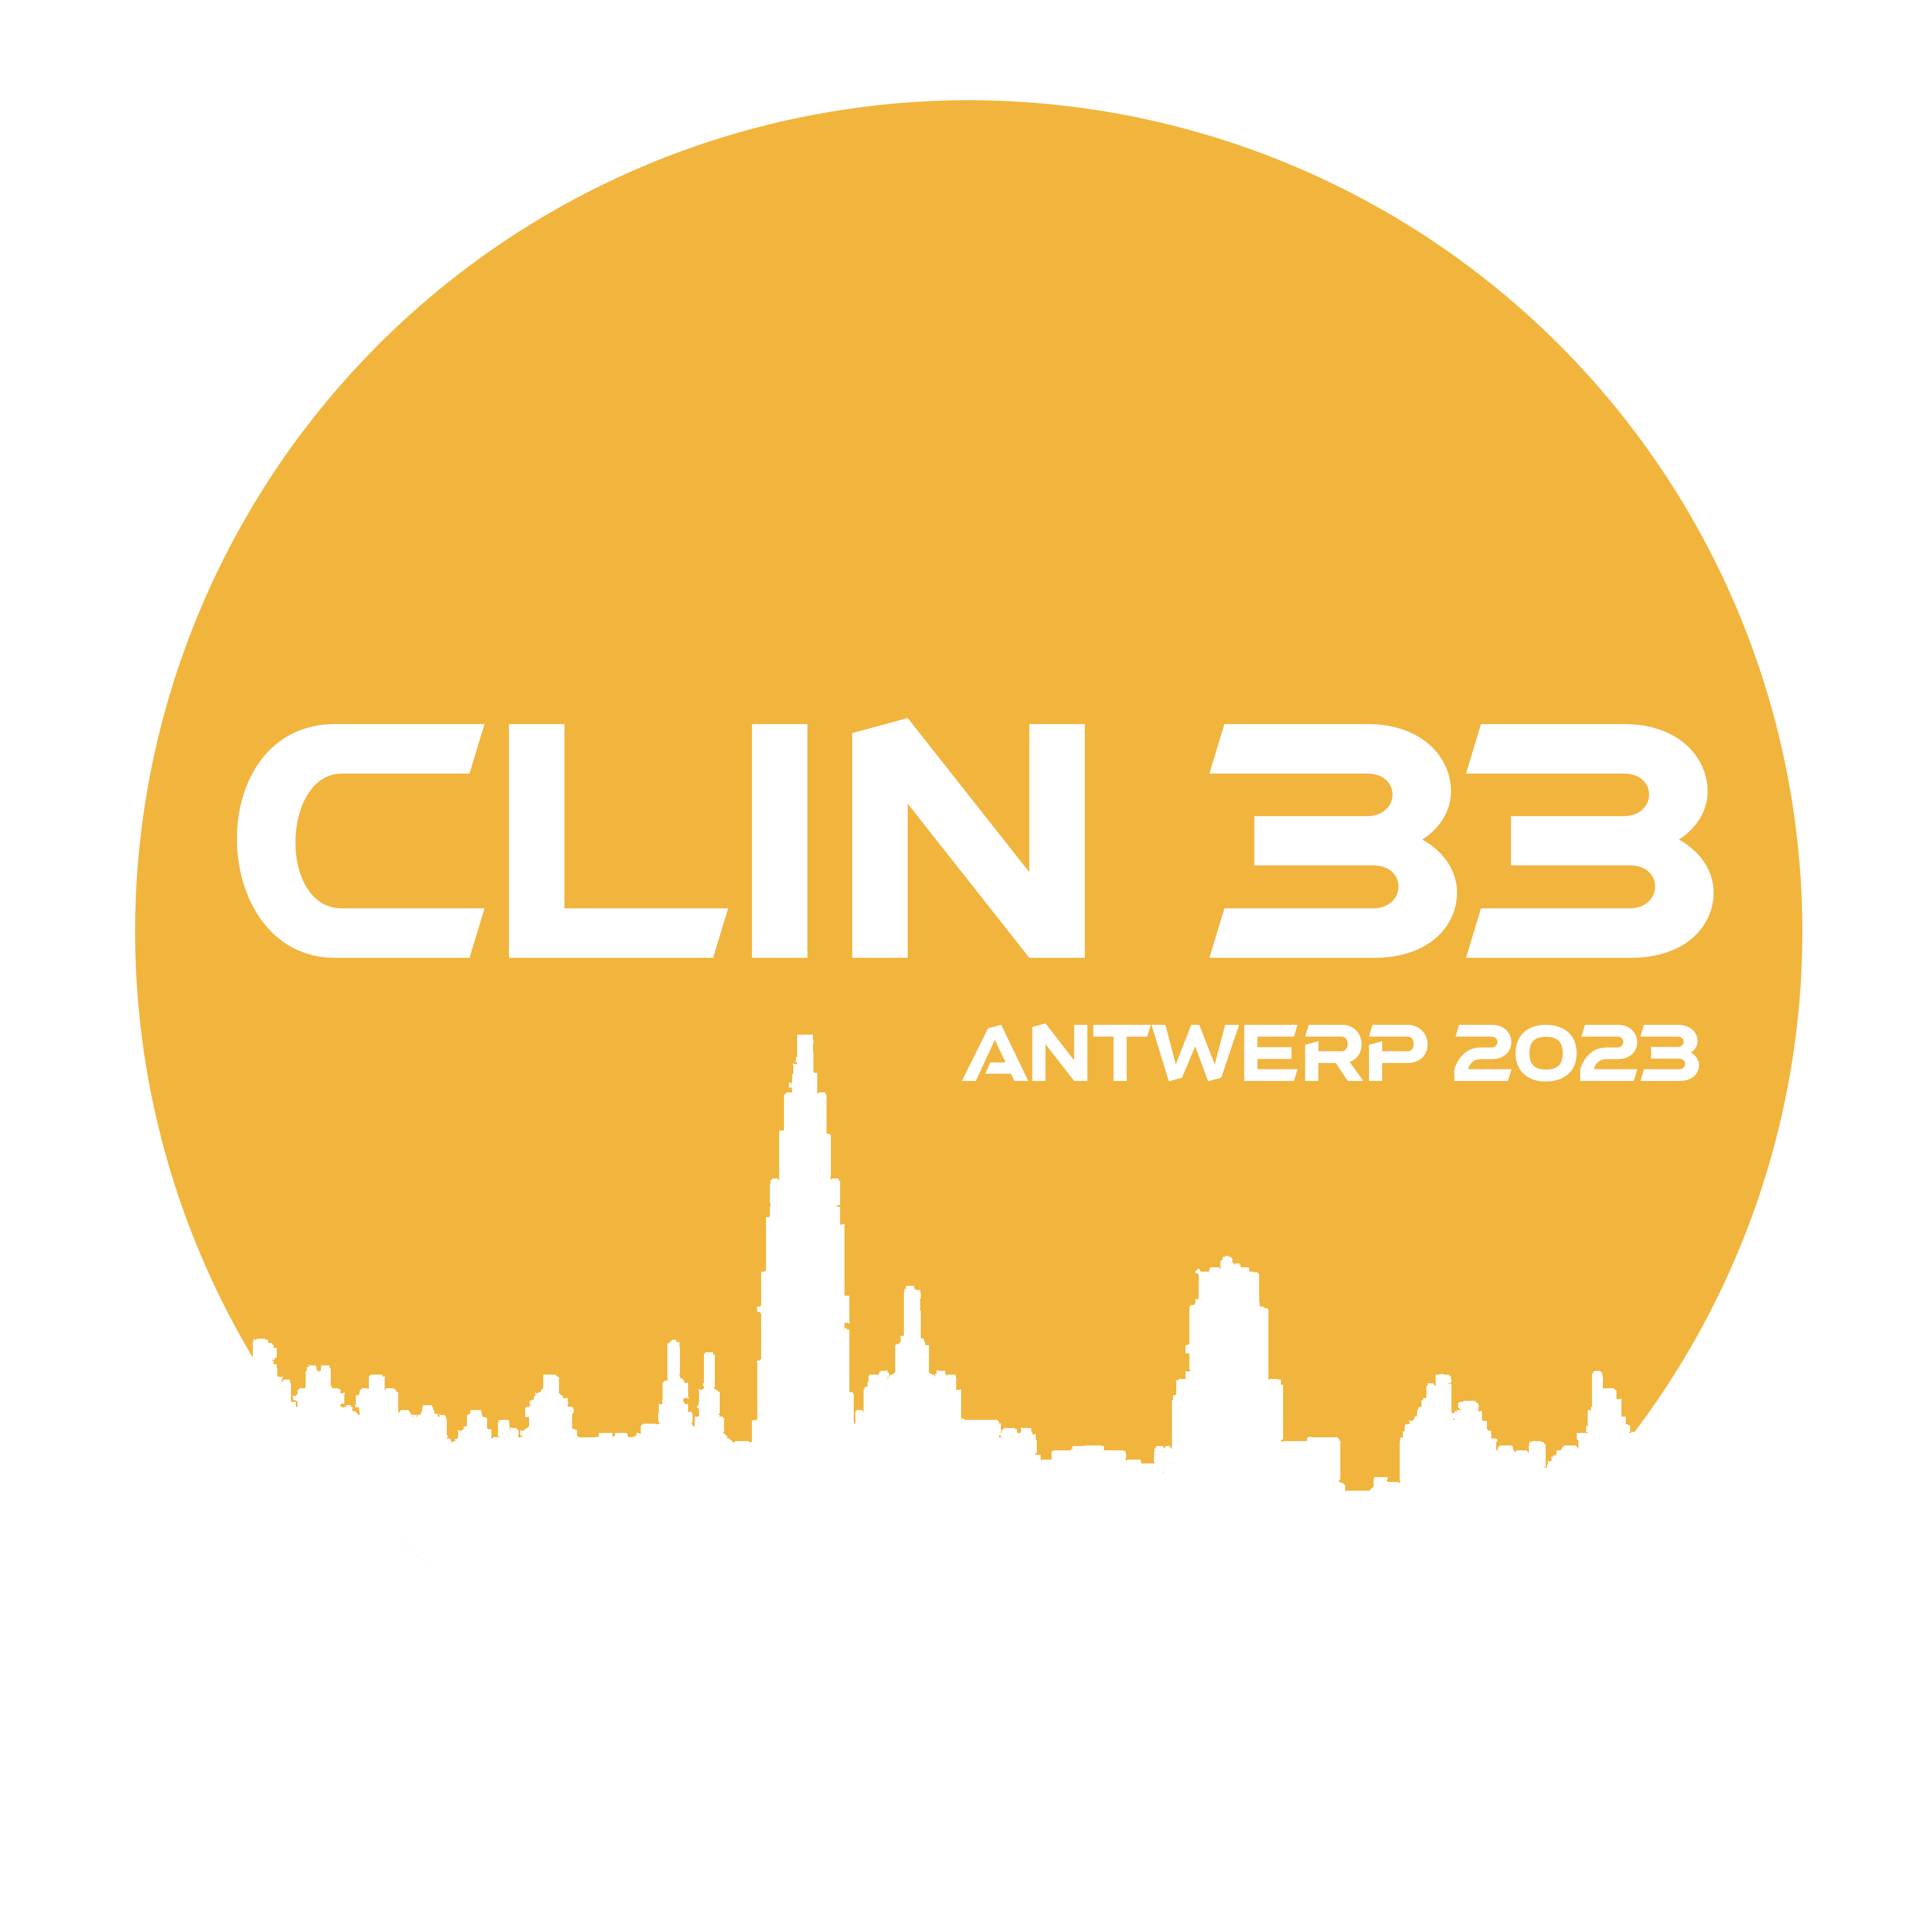 CLIN33 logo